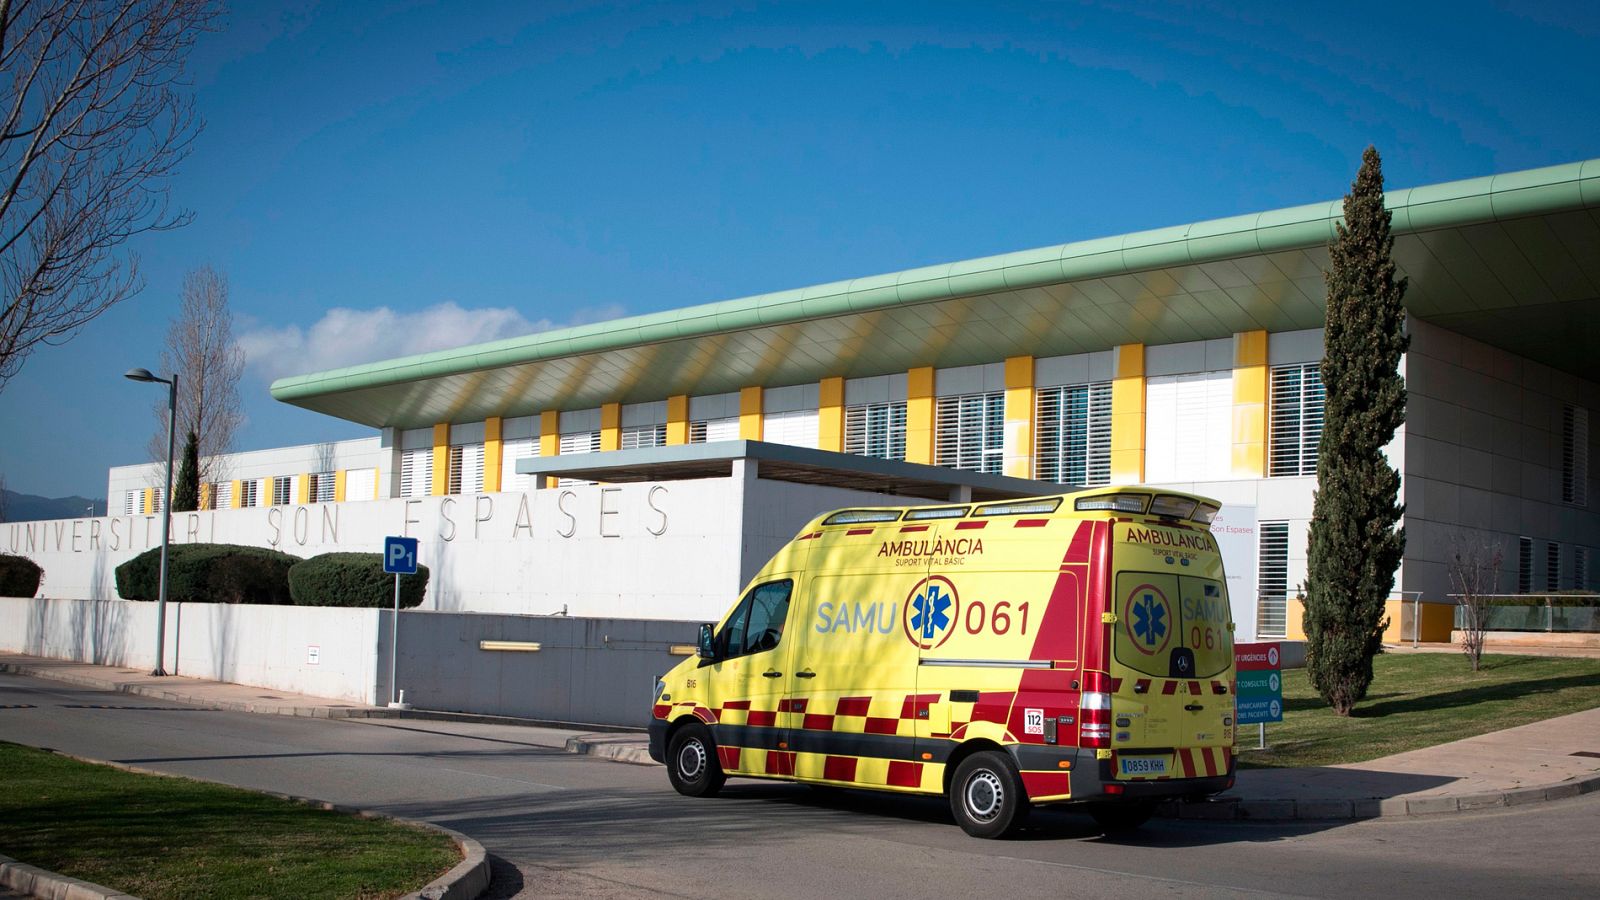 El británico infectado continúa aislado en un hospital de Mallorca